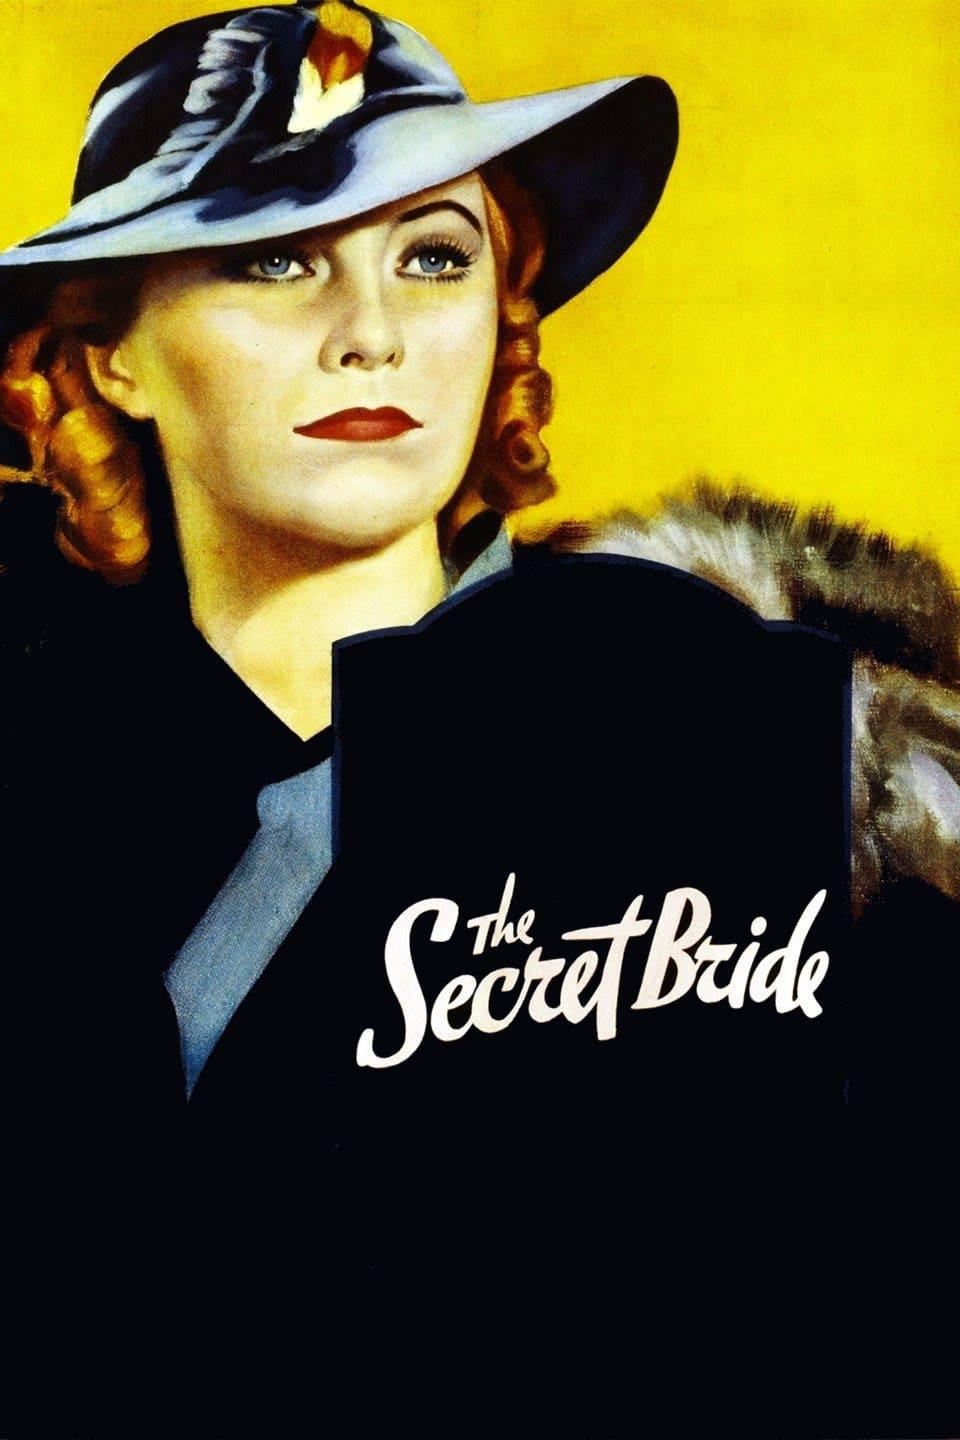 The Secret Bride poster